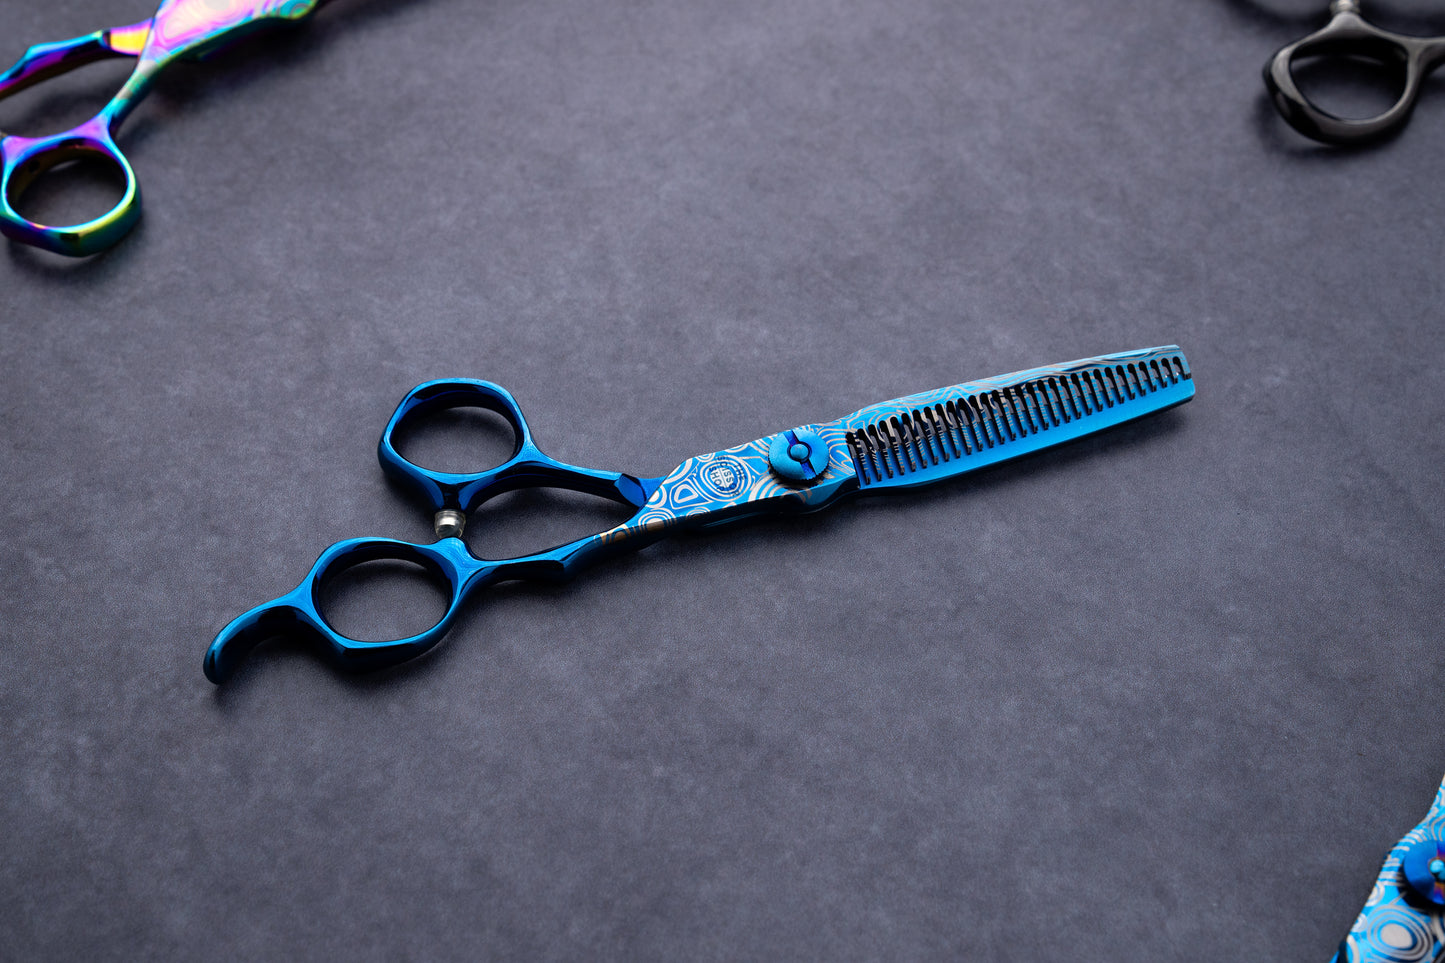 Aiiro Series 6" Japanese Steel Hairdressing Scissors